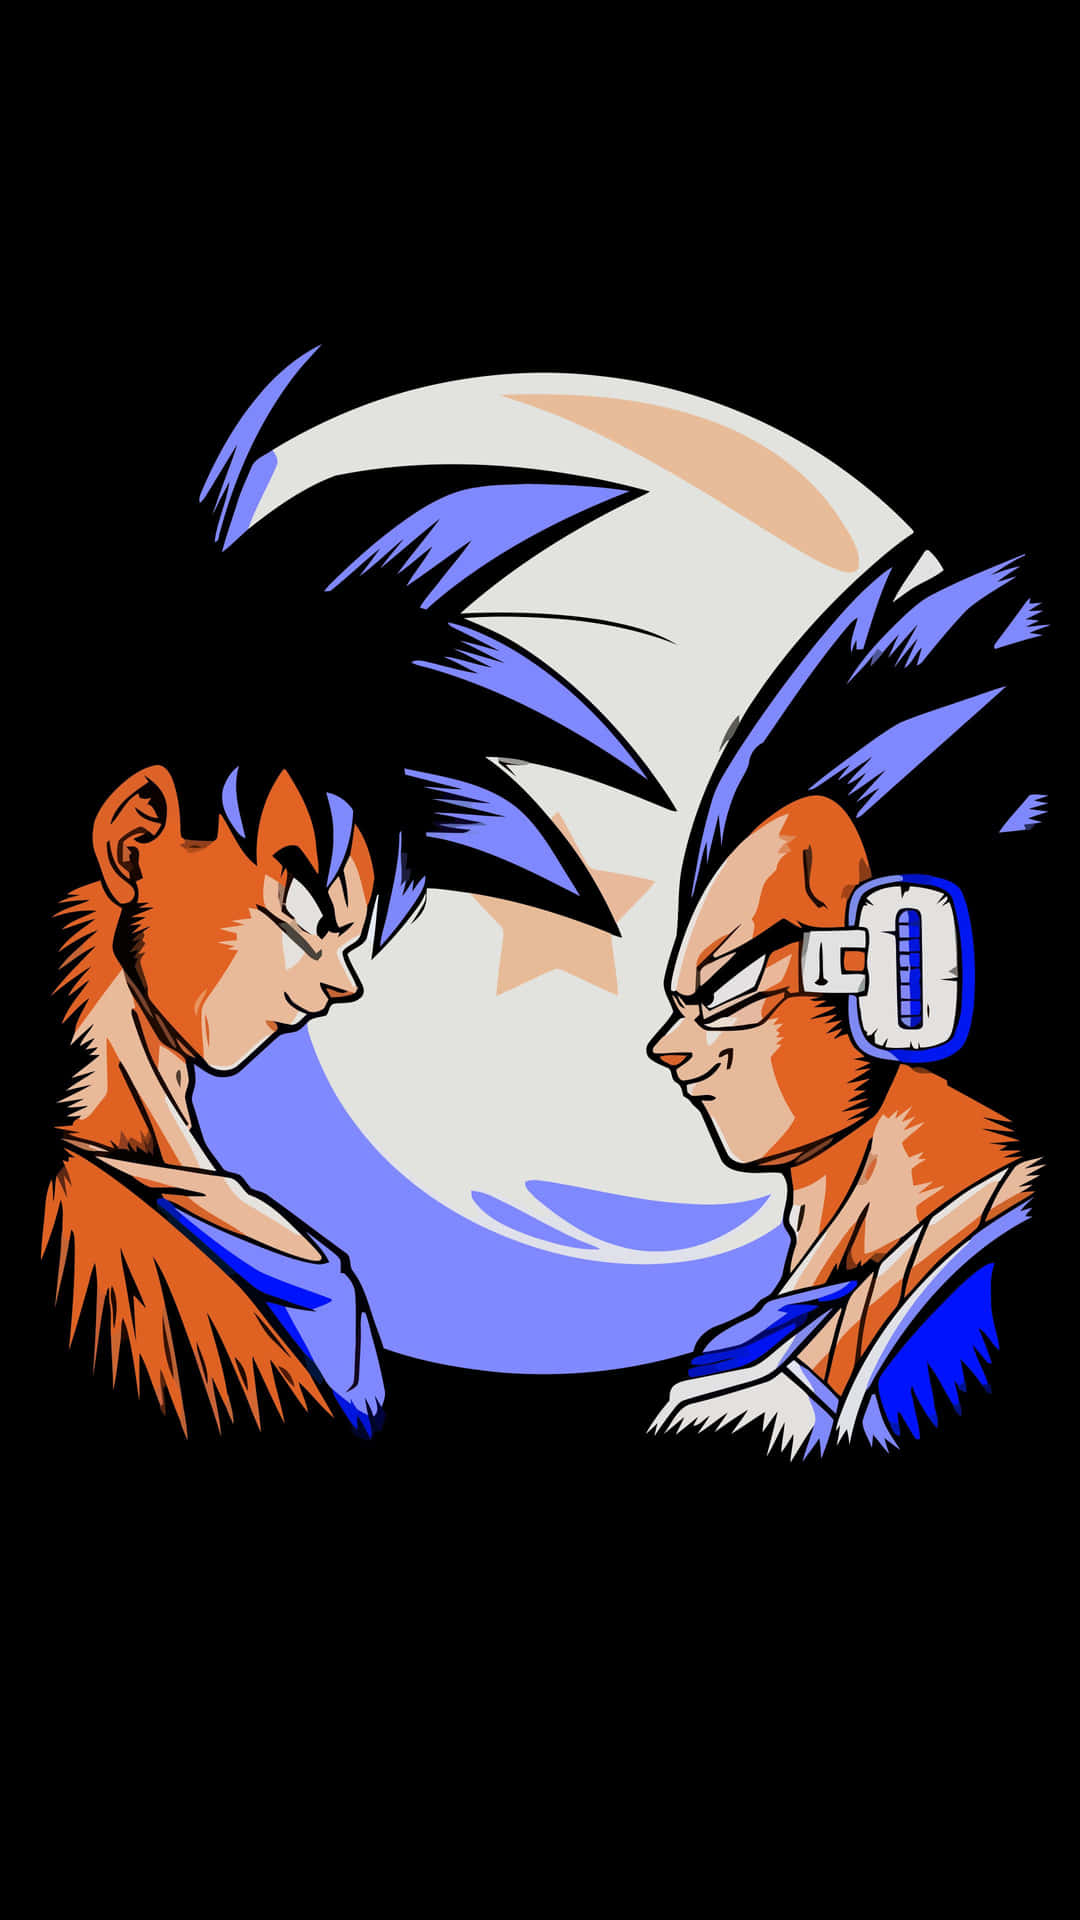 Stream the latest Dragon Ball Super episodes on your Goku&Vegeta iPhone wallpaper Wallpaper